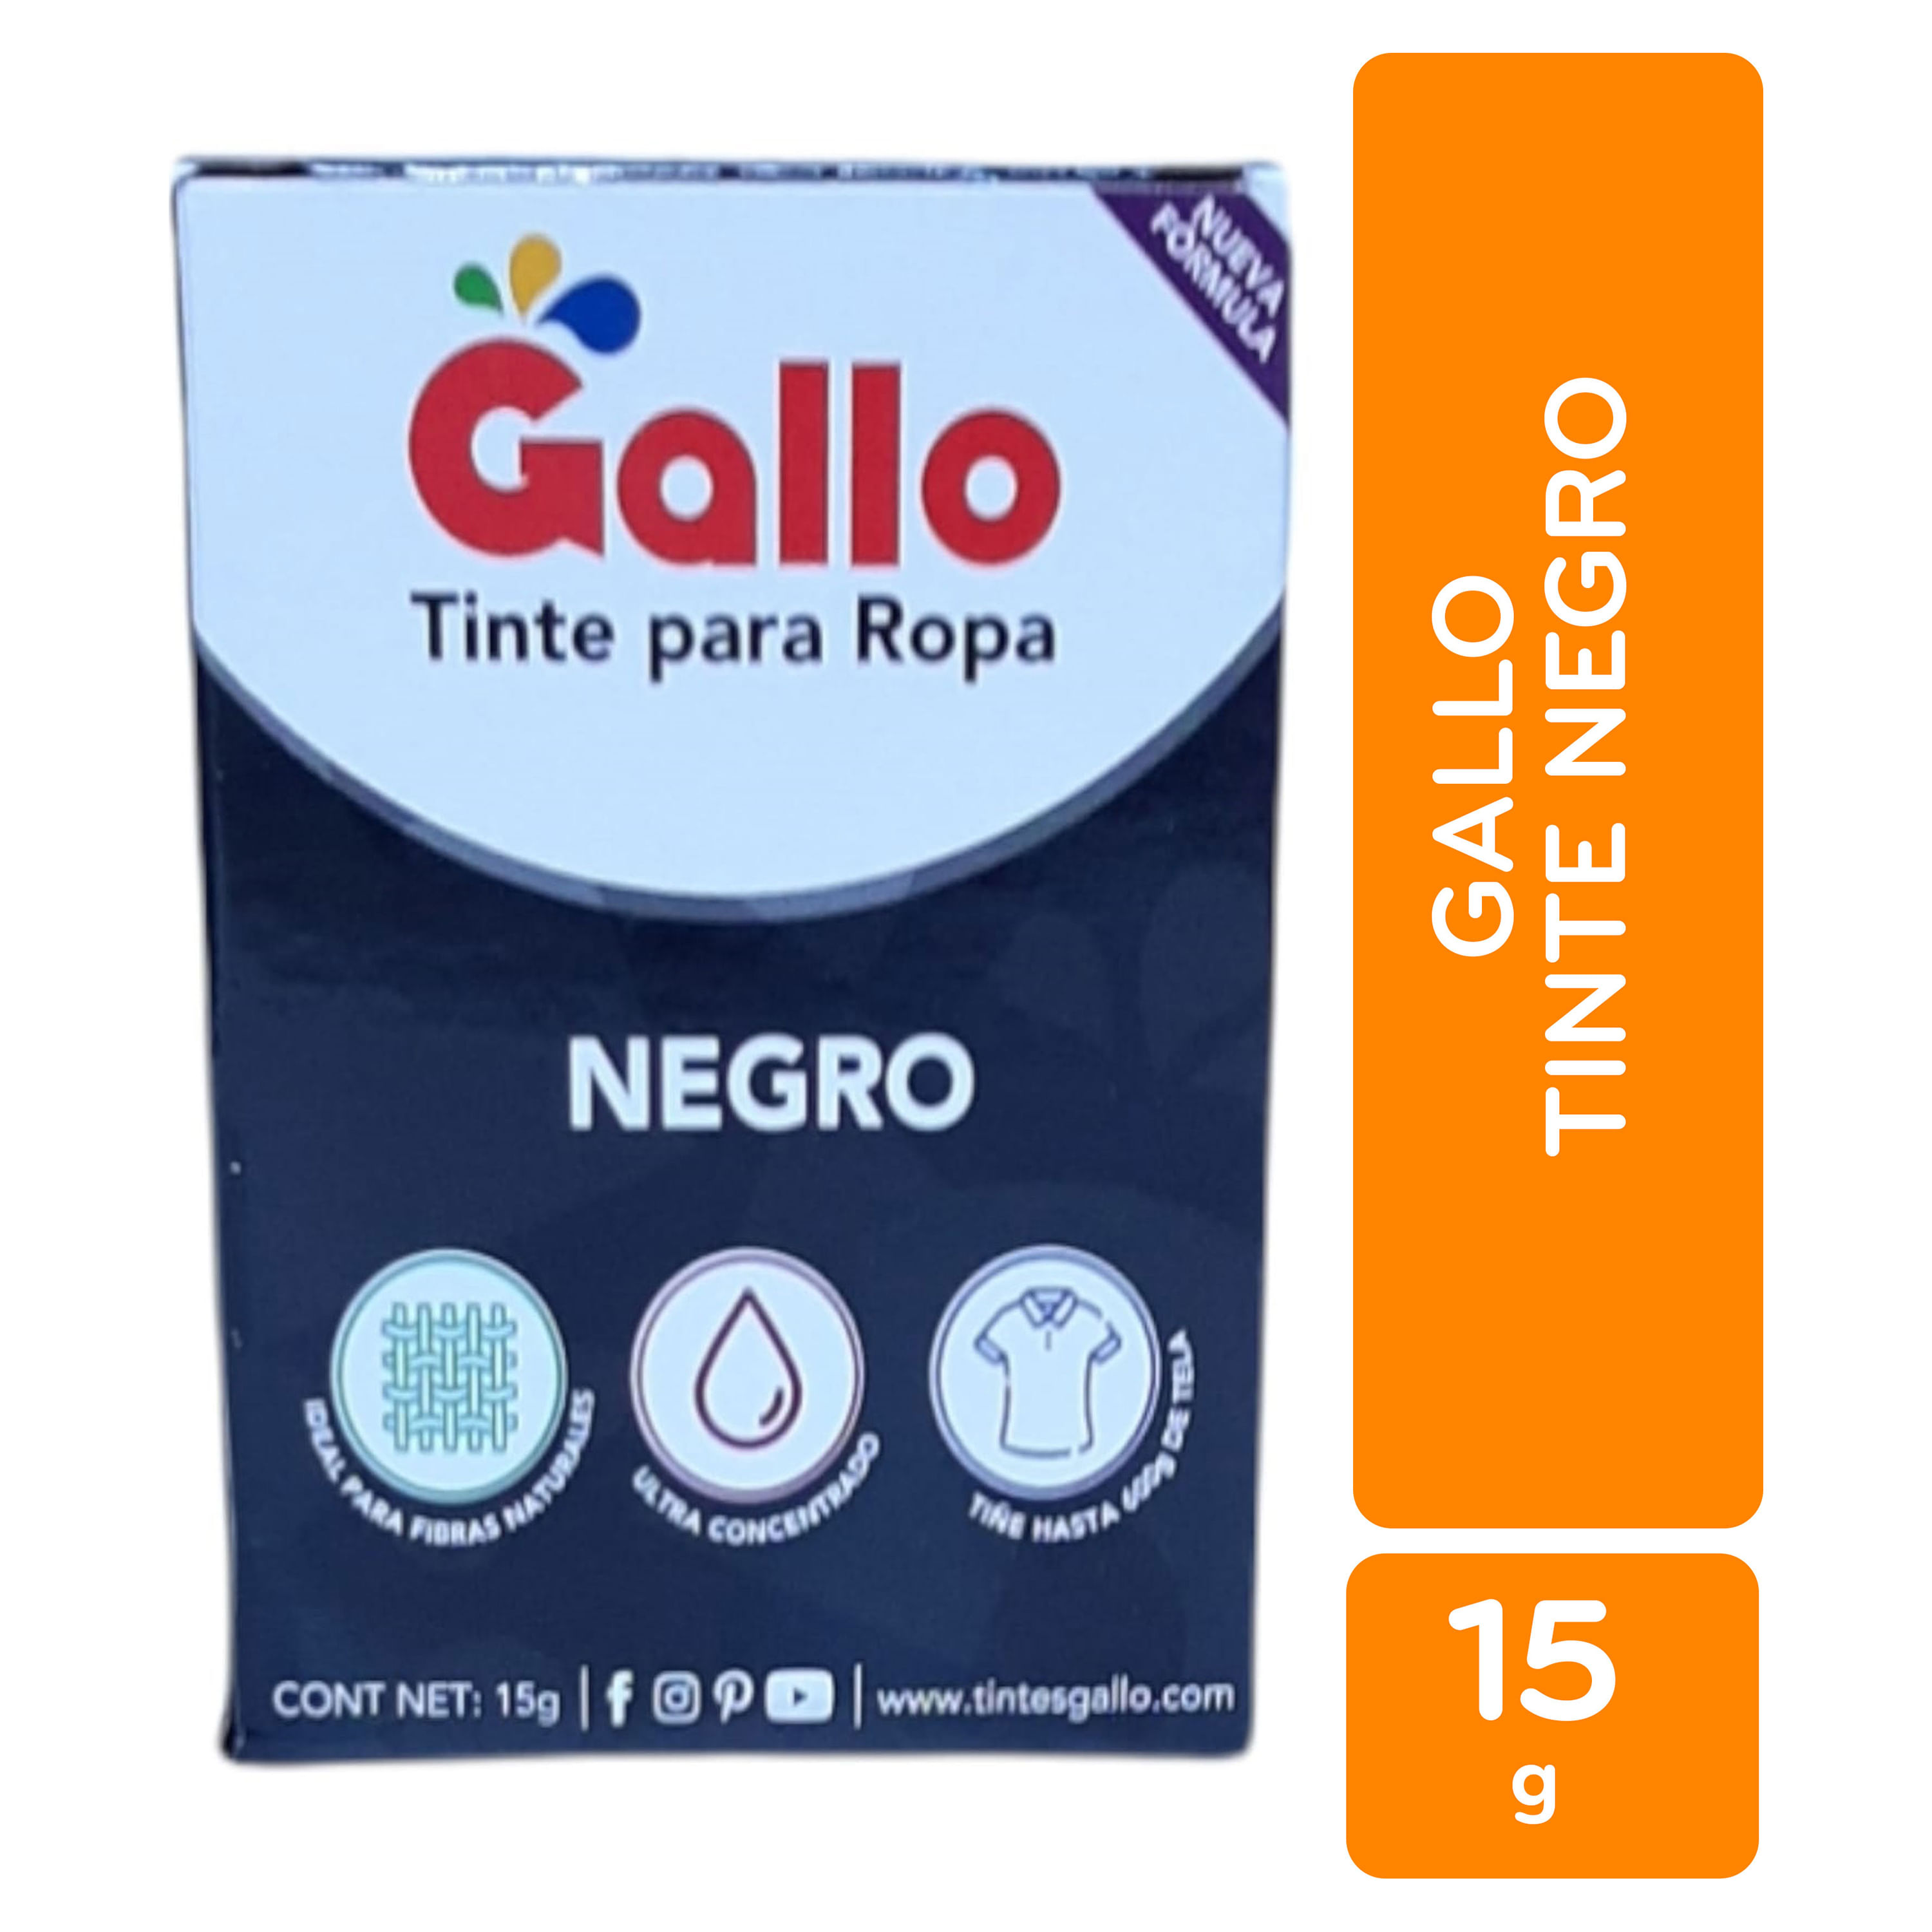 Gallo tinte para ropa color negro (caja 15 g), Delivery Near You